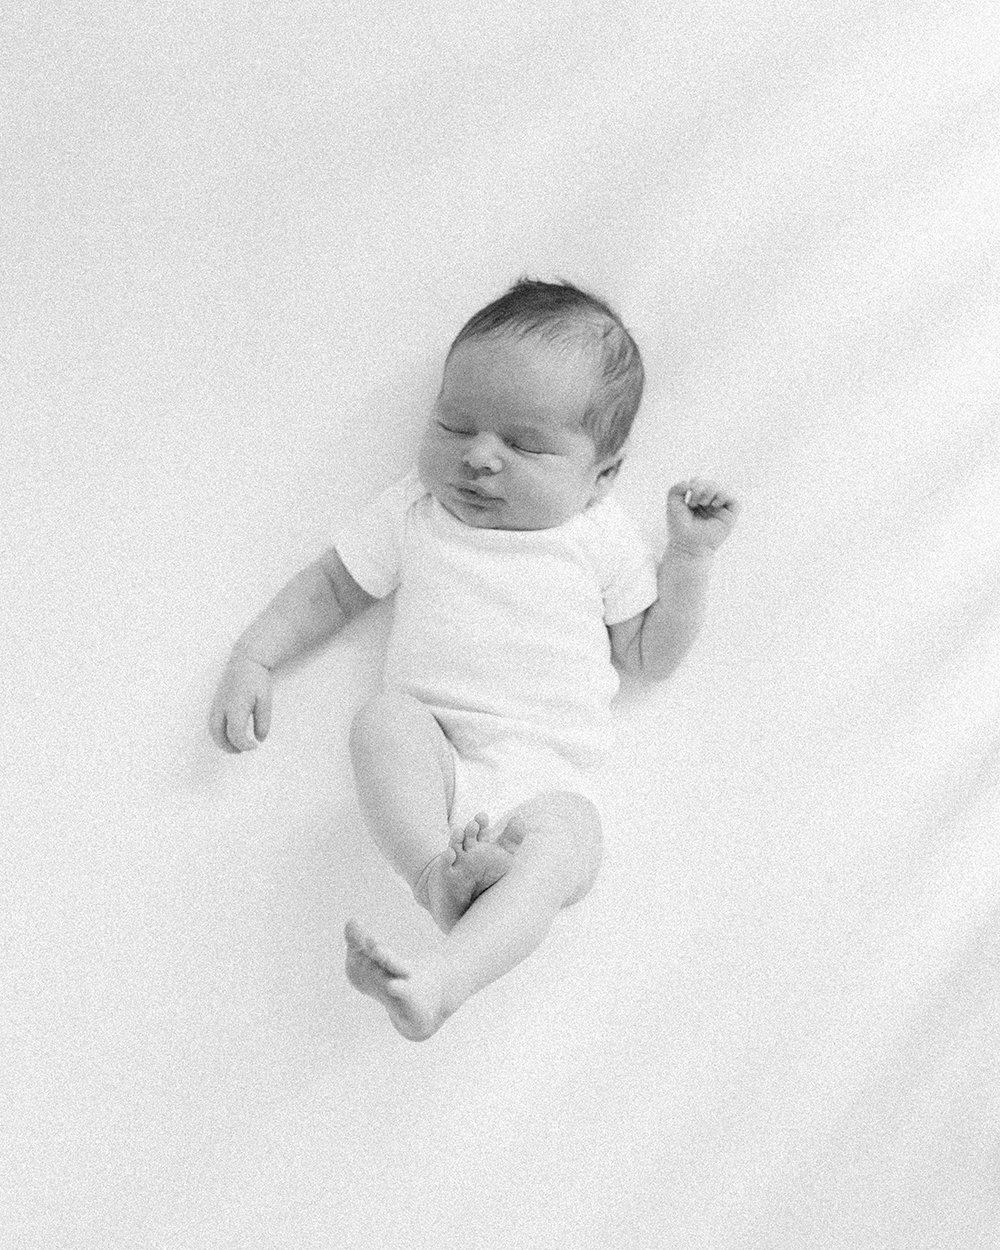 wilmington nc lifestyle photographer, newborn lifestyle session, cozy in-home newborn session